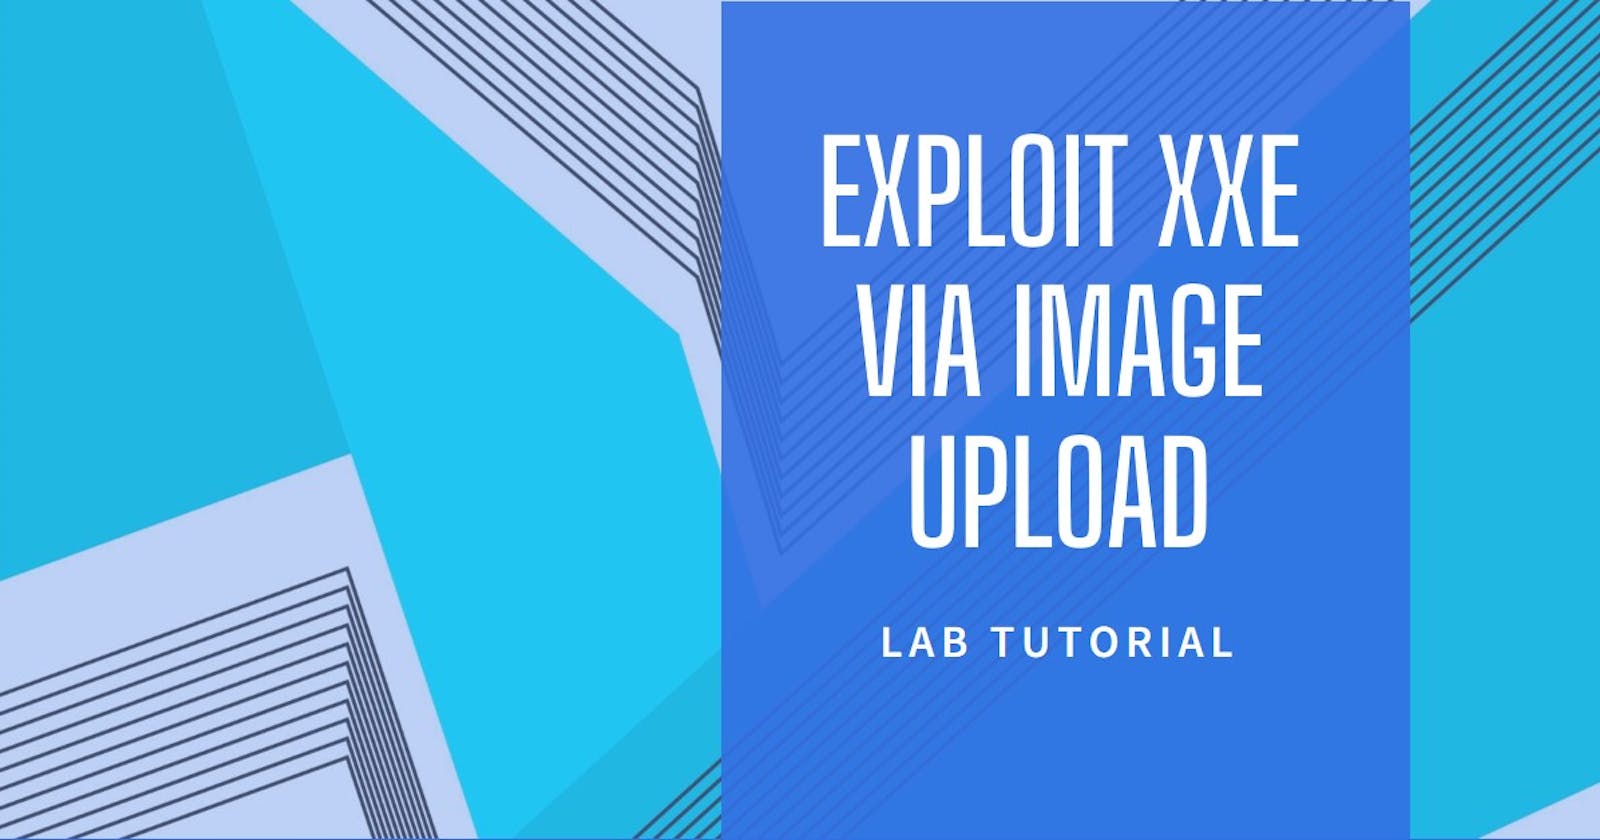 Lab: Exploiting XXE via image file upload